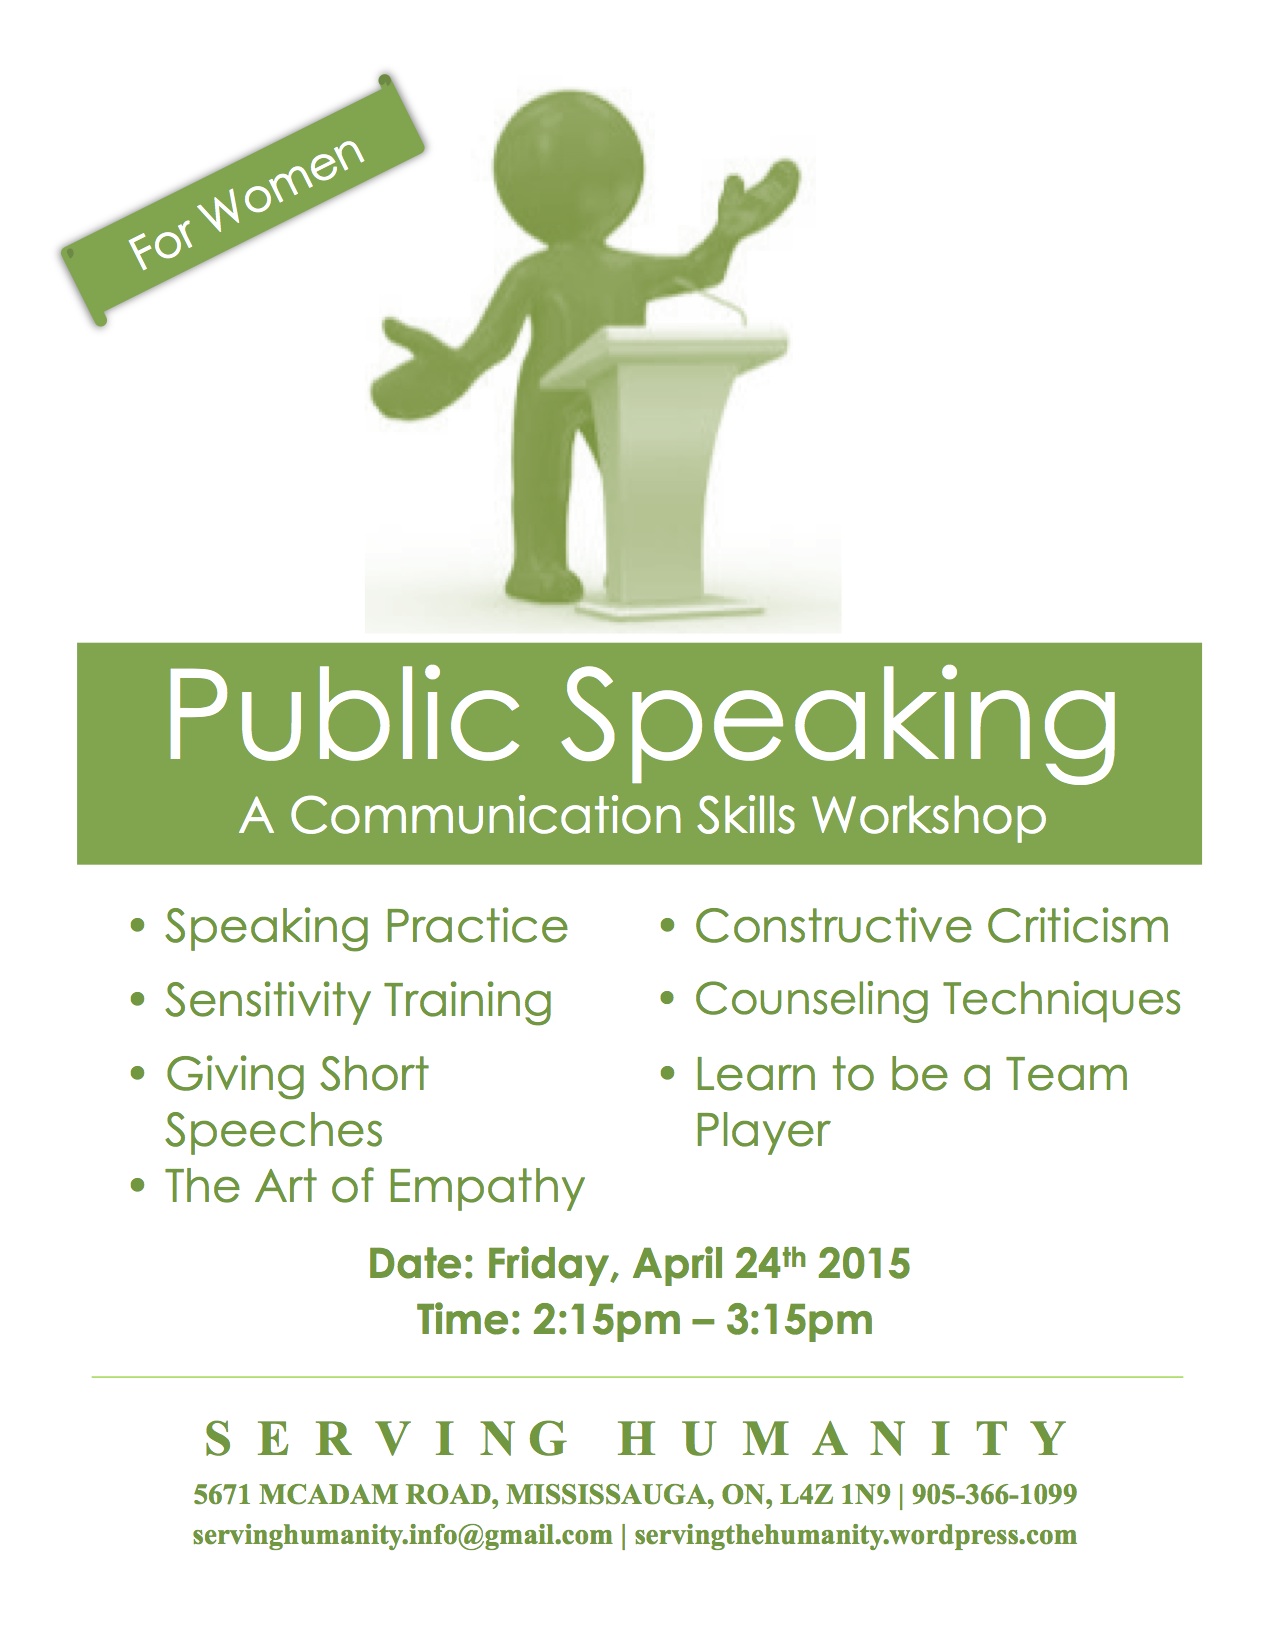 Public Speaking Workshop Flyer